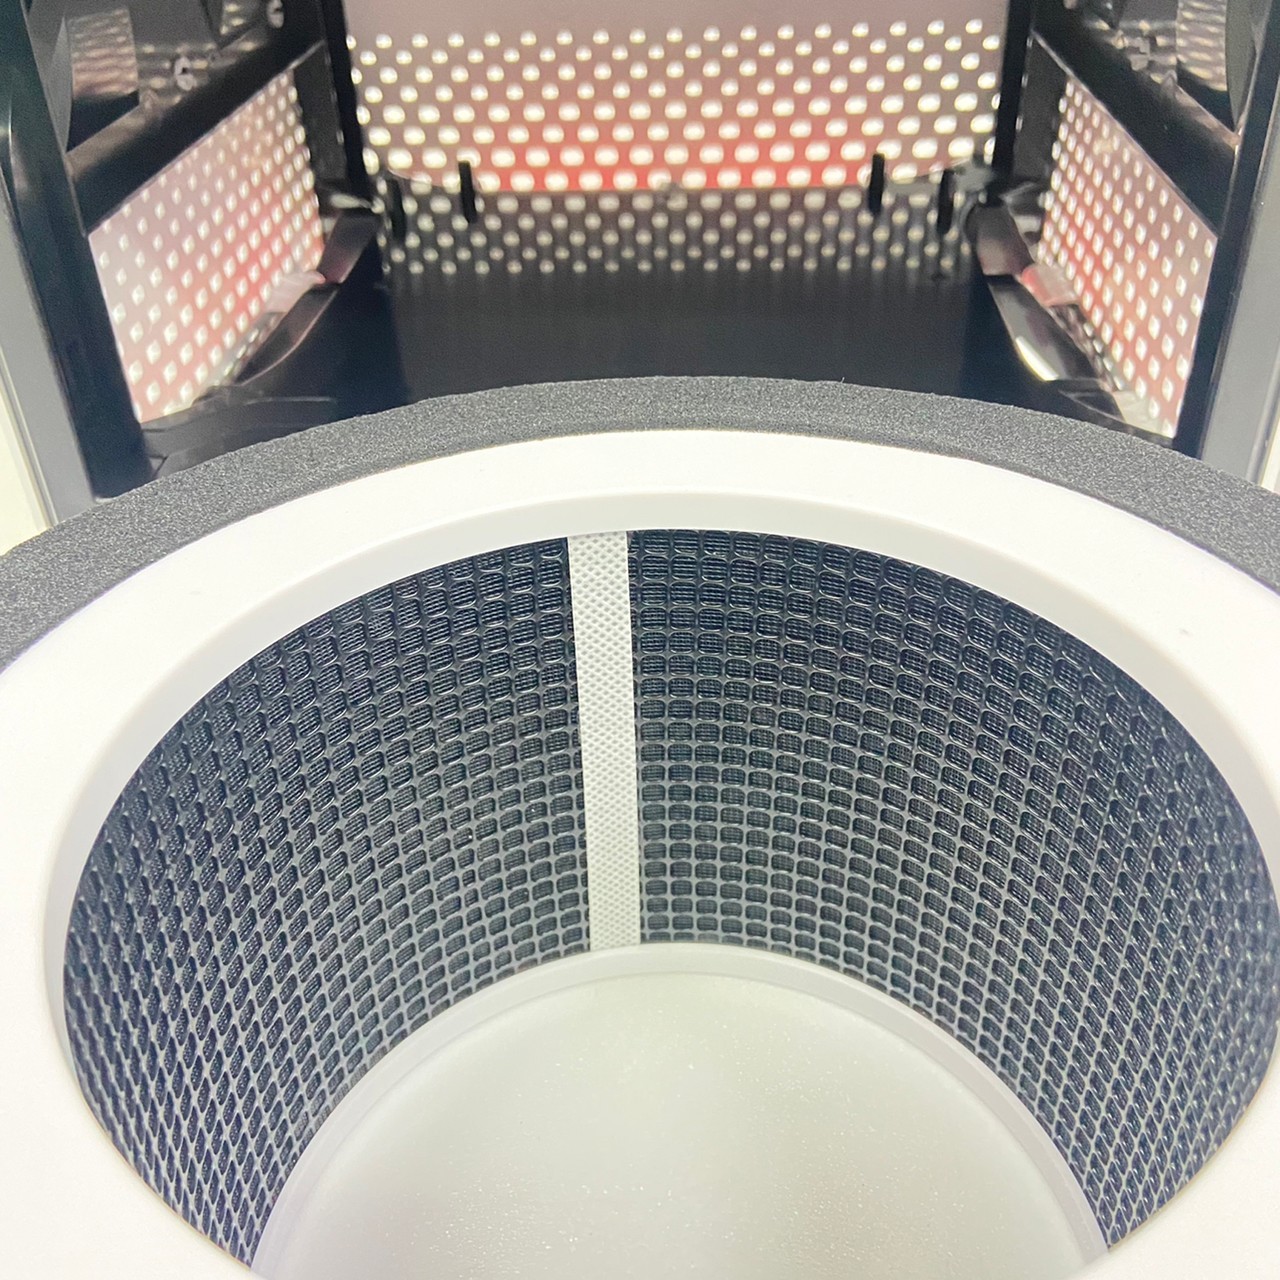 【ANDES】Bio Micron 固態網狀光觸媒 空氣清淨機 空氣淨化機 BM-S611AT